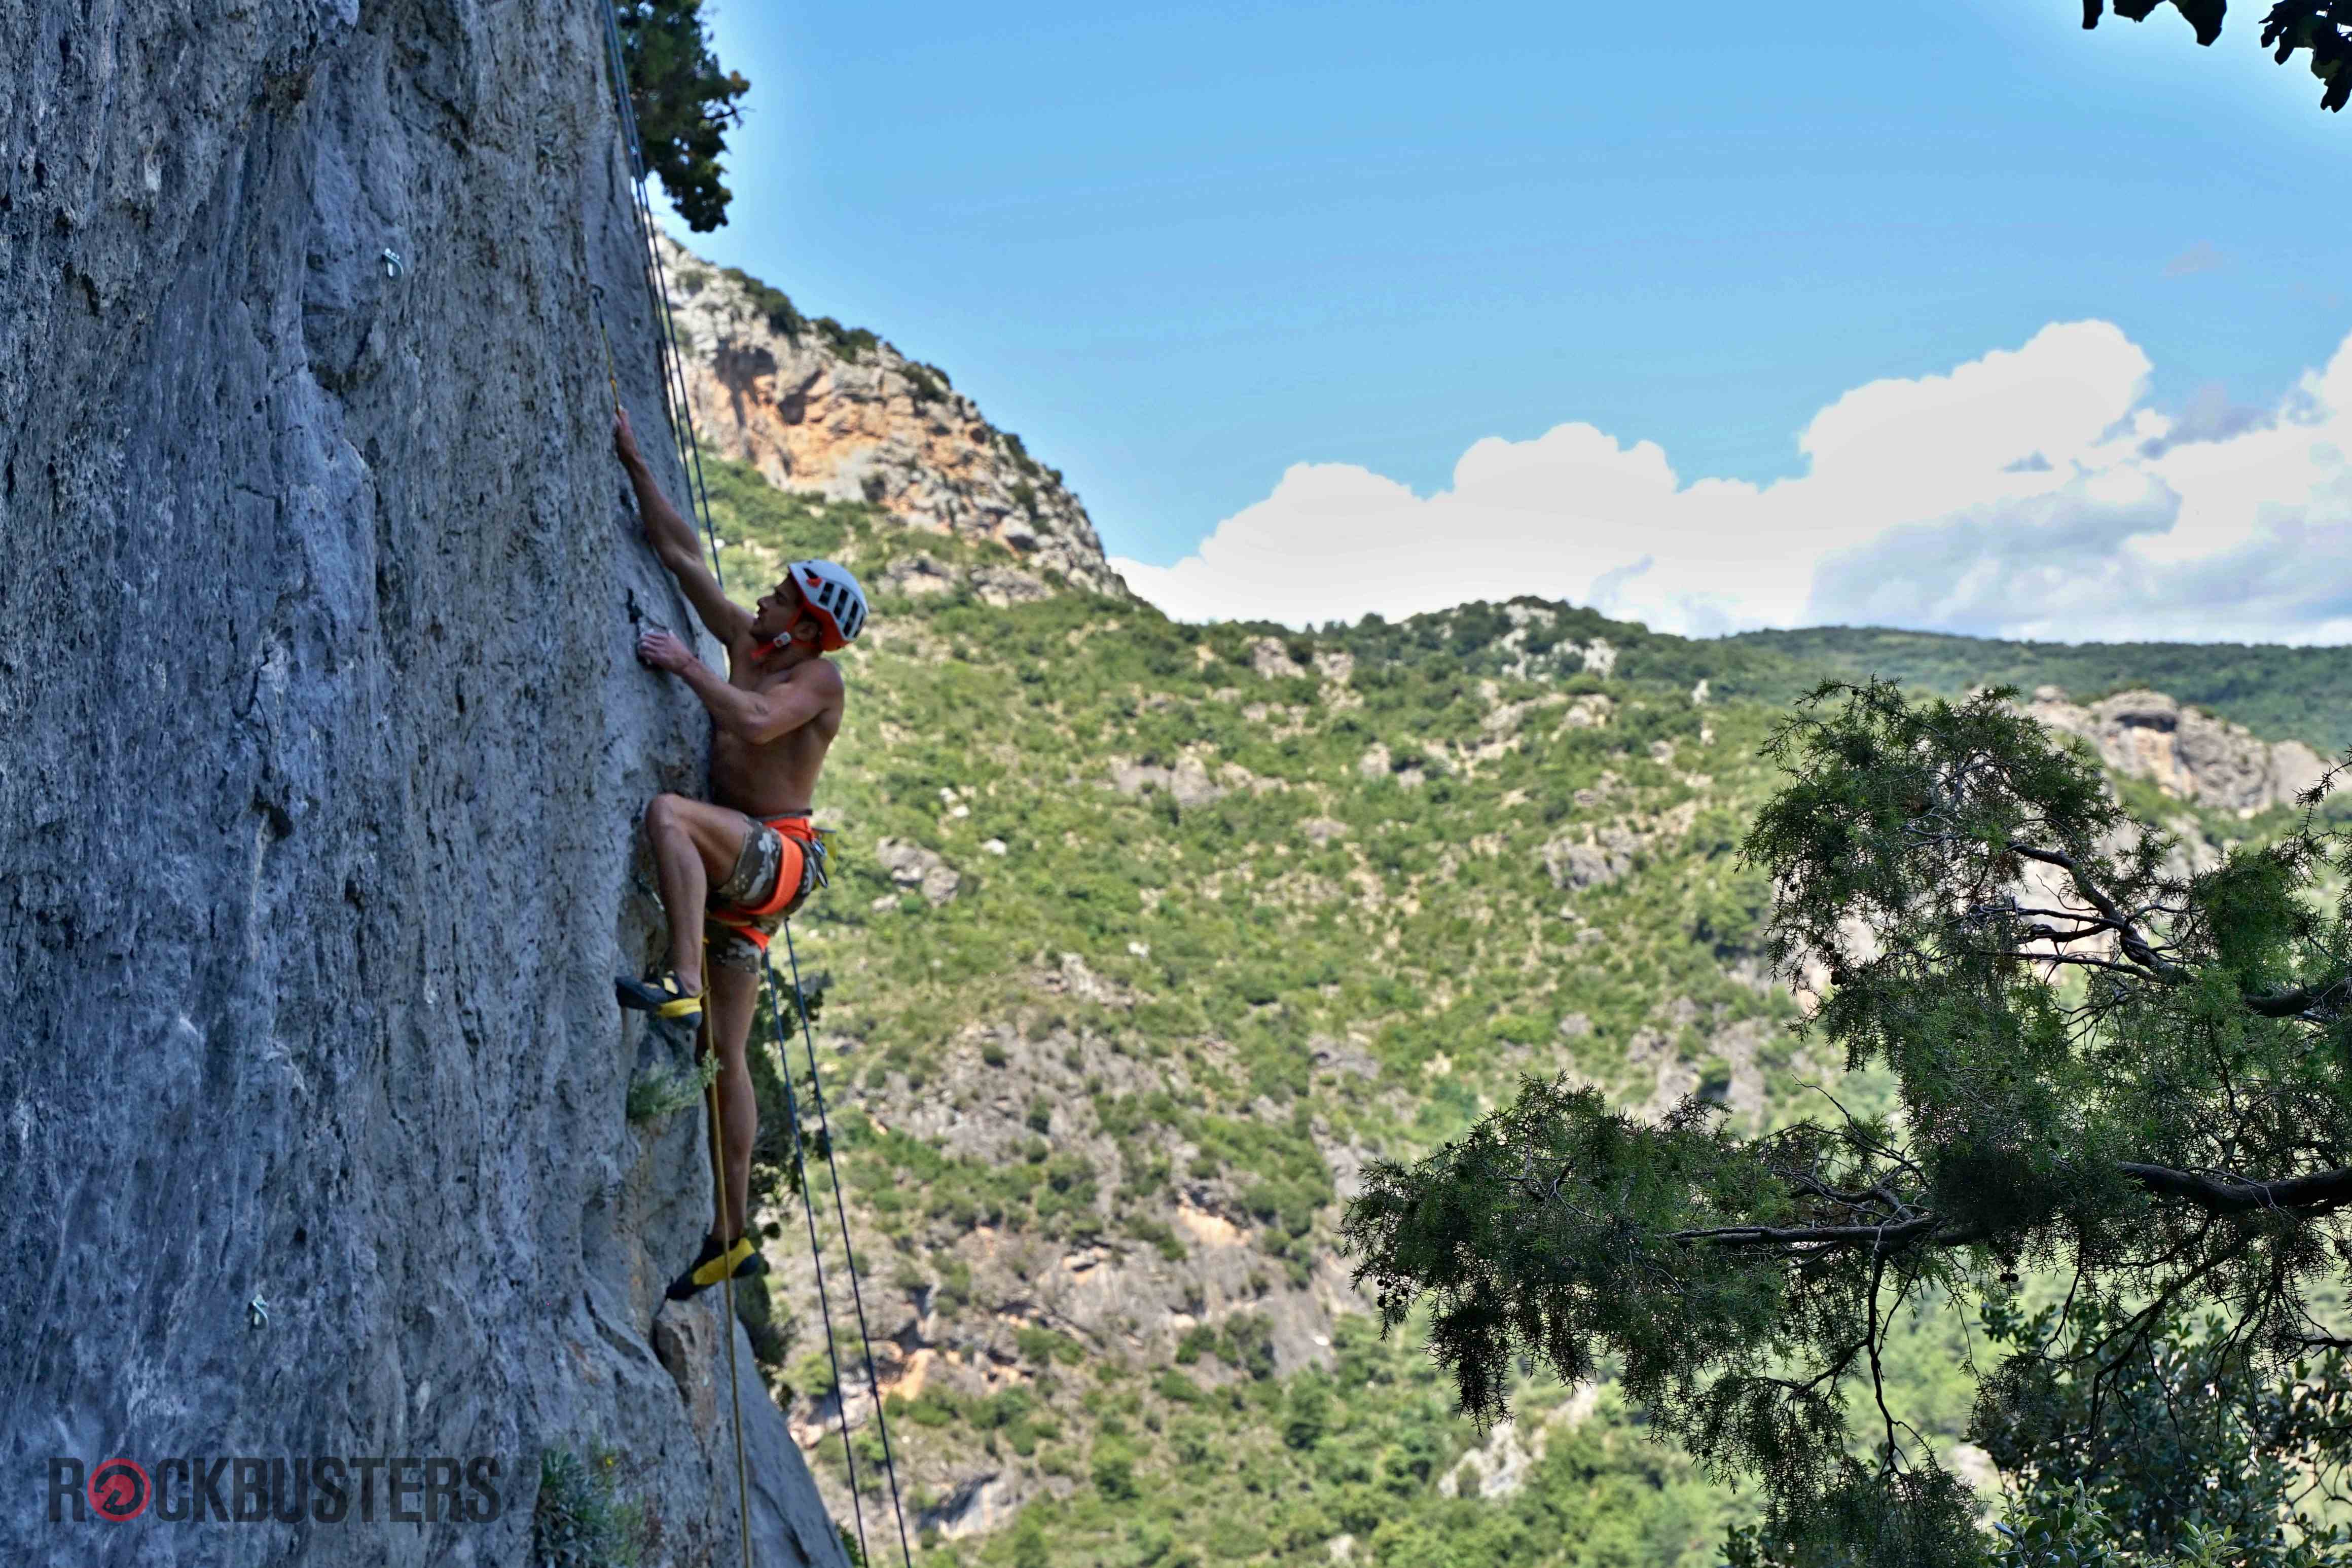 A sport climber during Rockbusters' Advanced sport climbing coourse